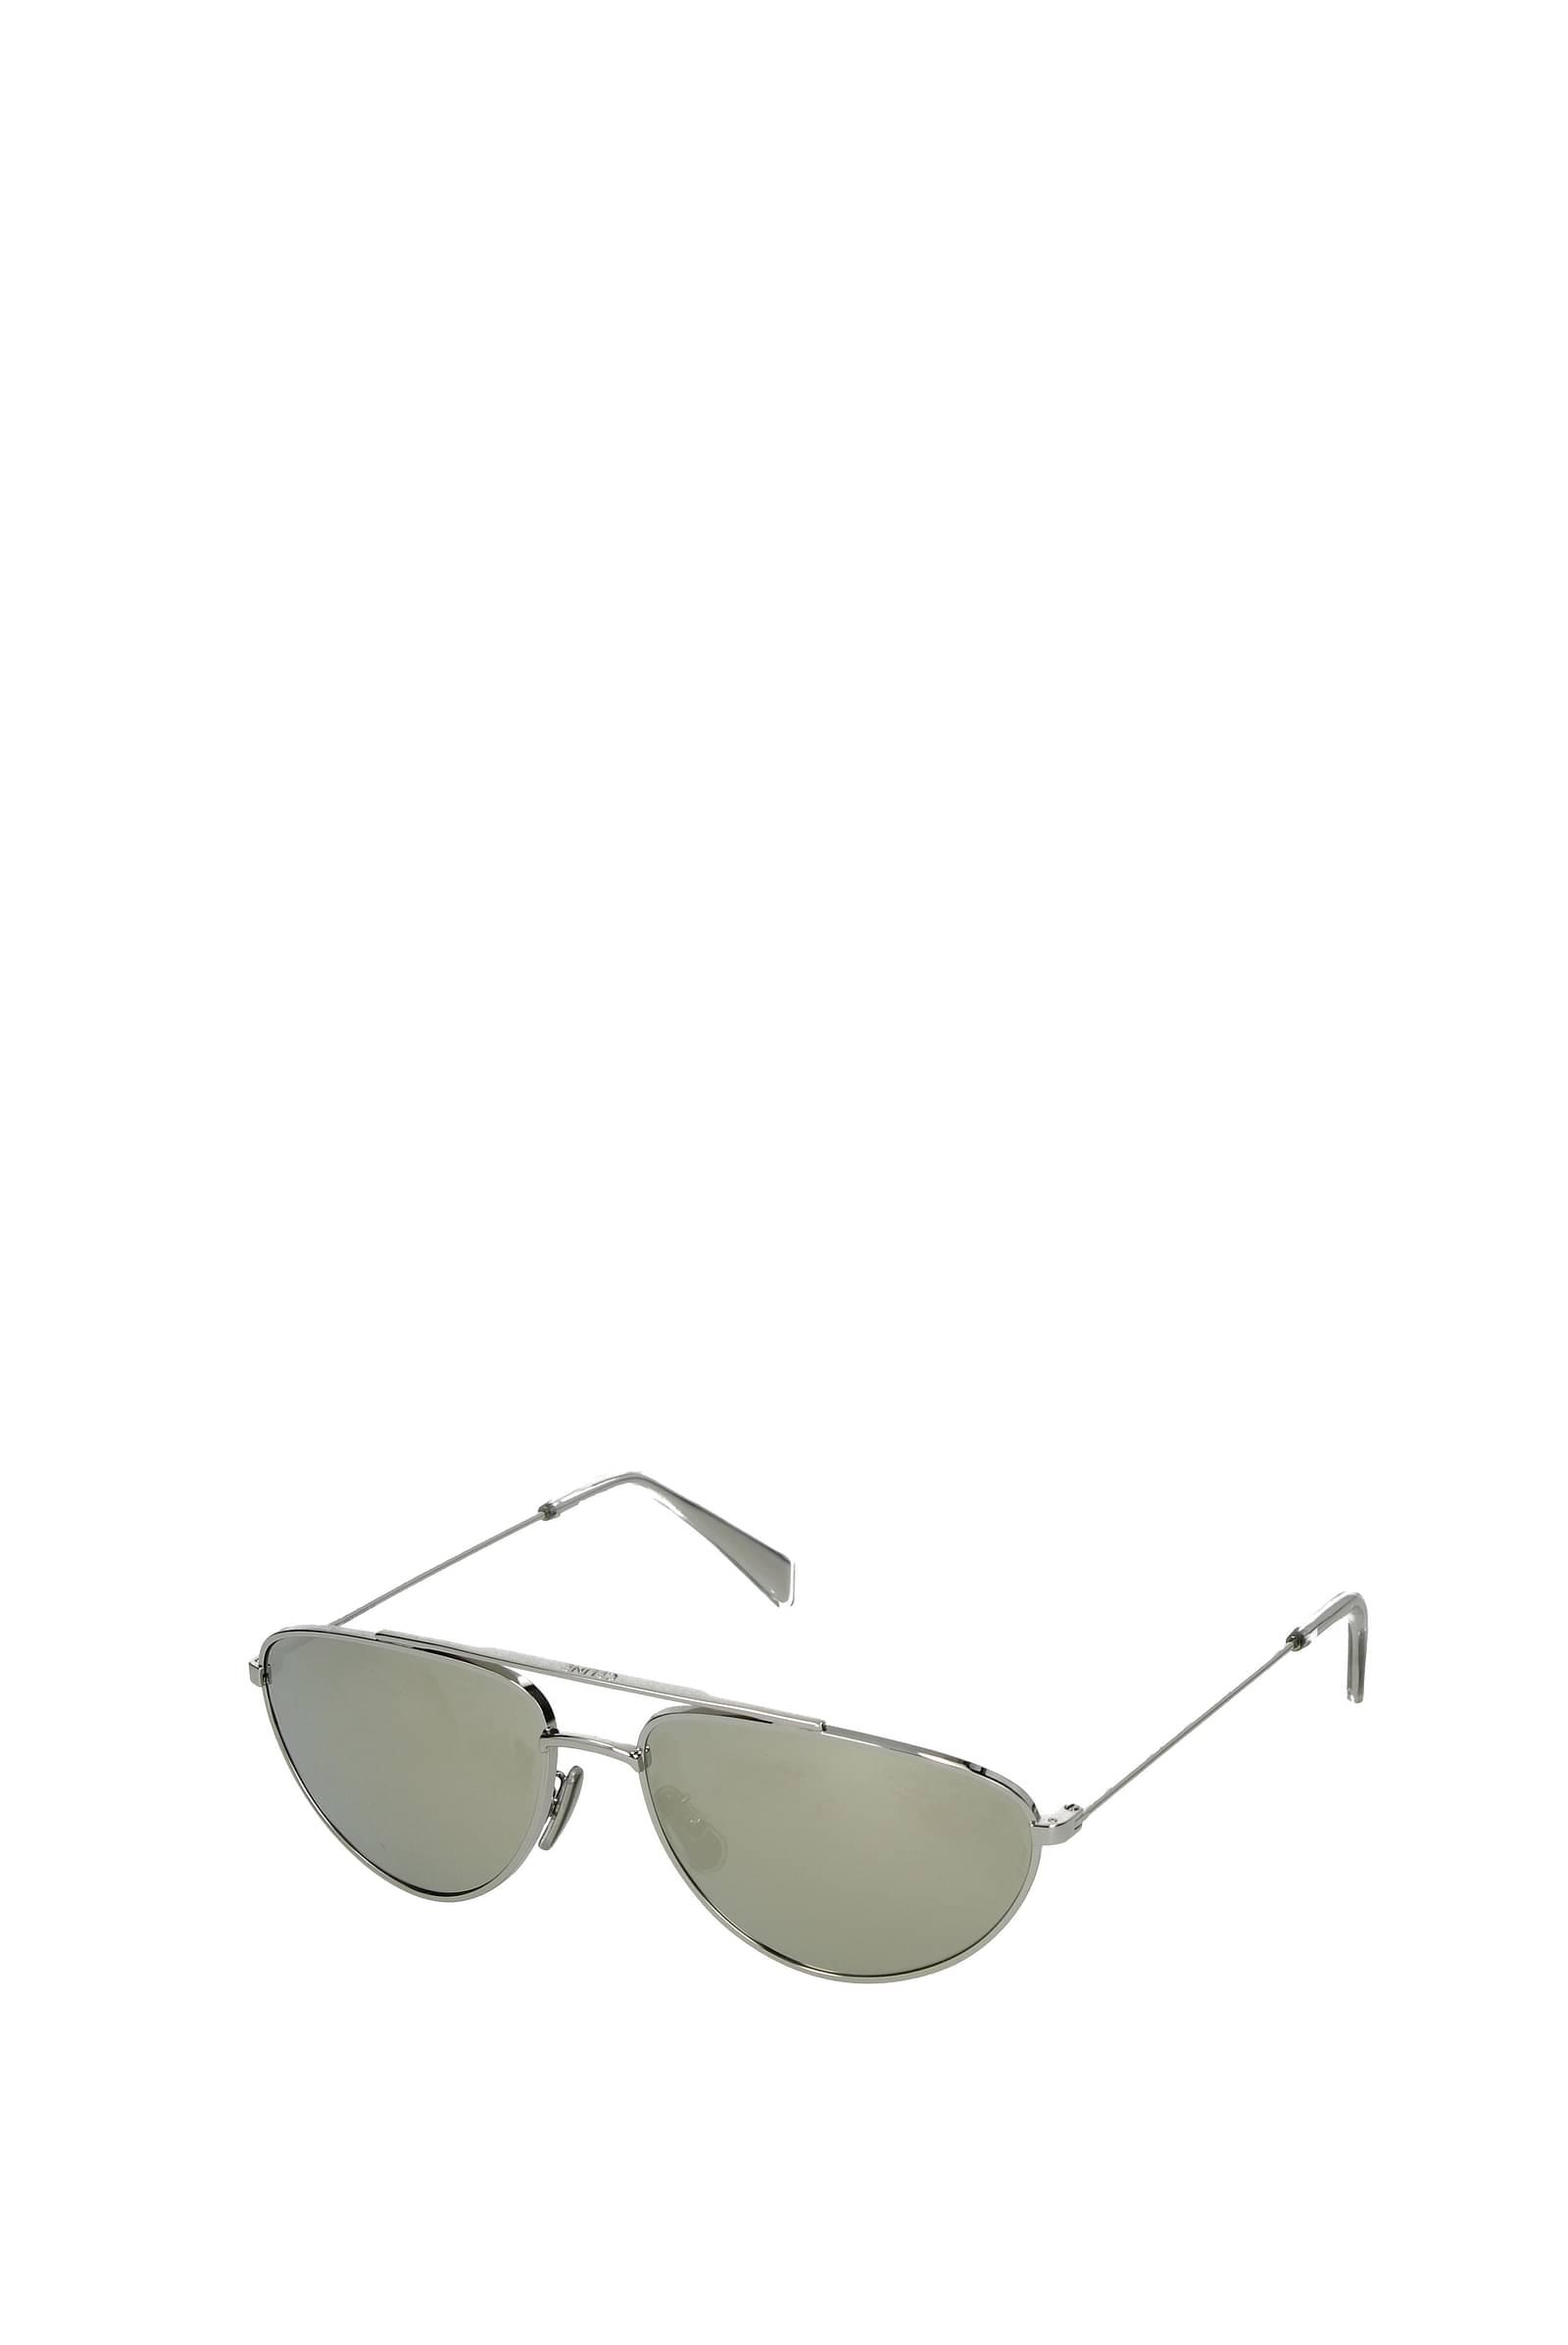 Celine Sunglasses Metal Silver | Lyst